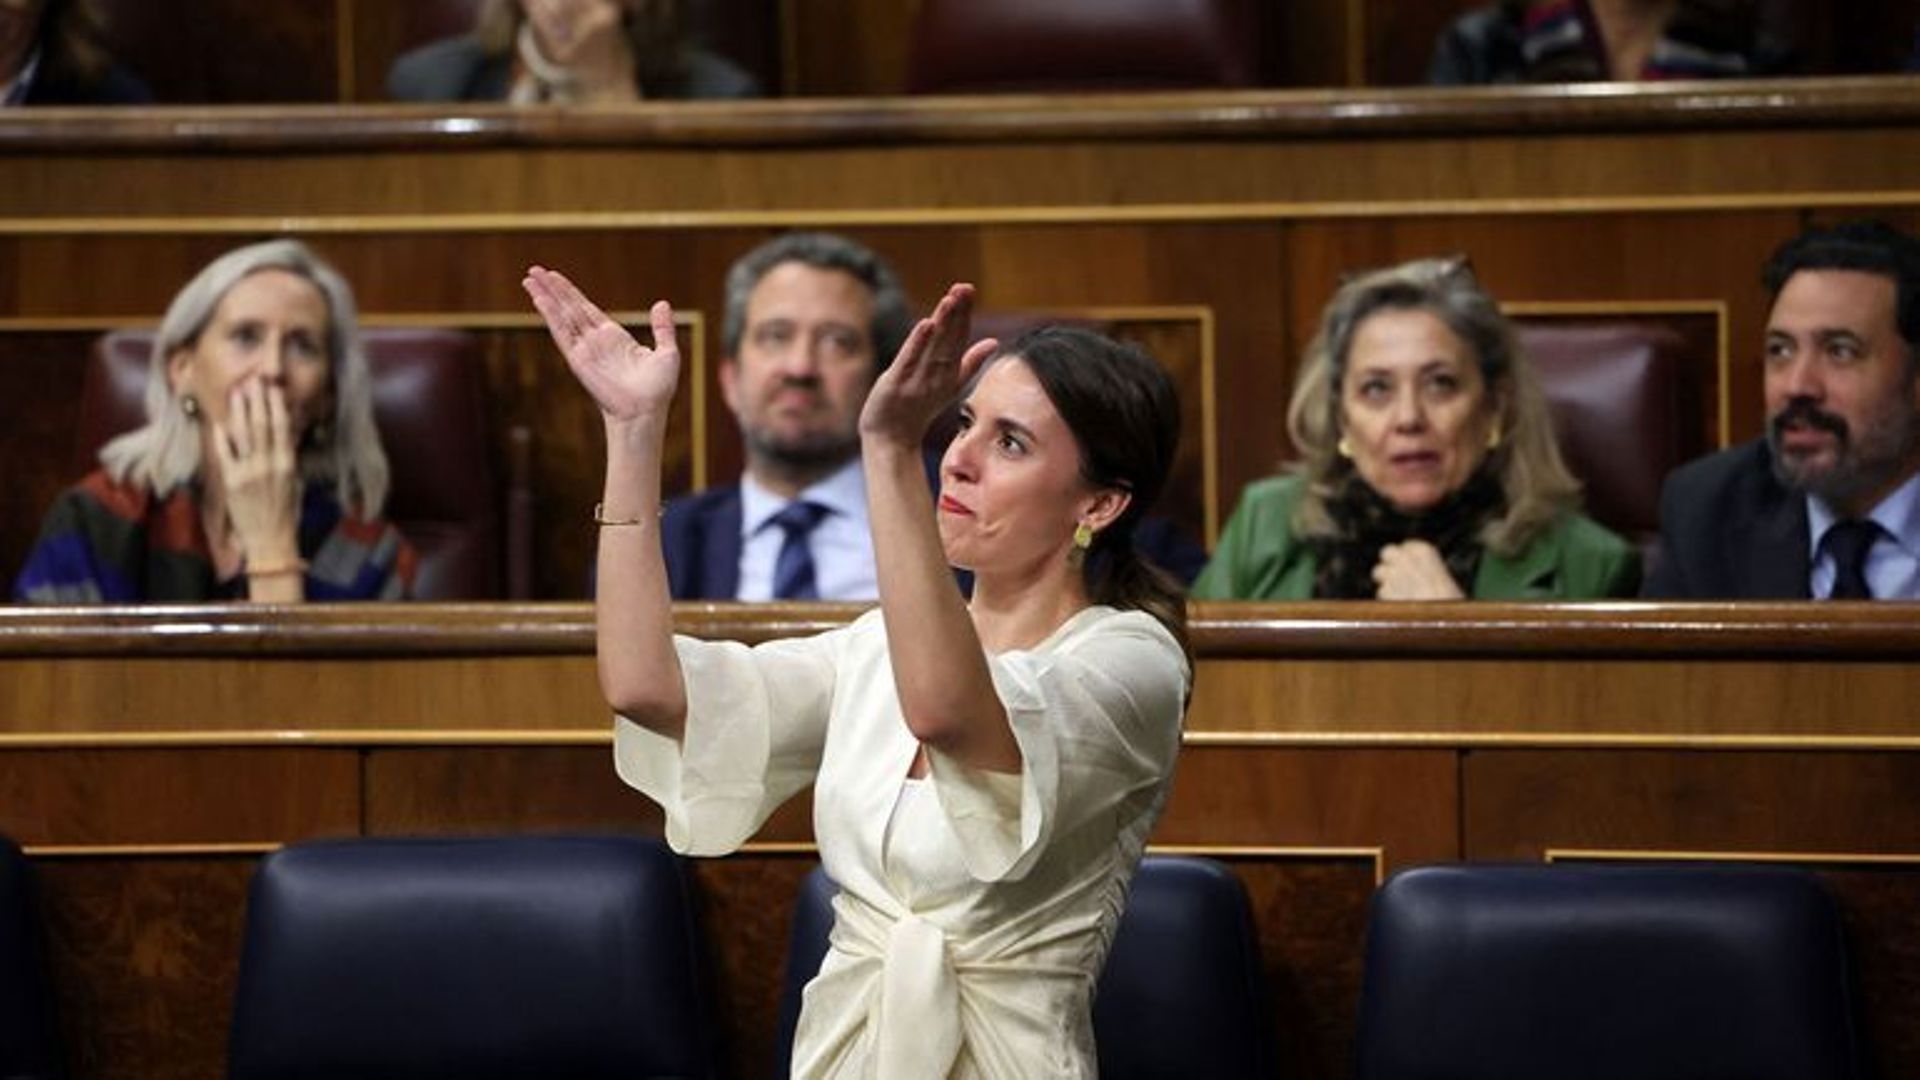 © Thomas COEX / AFP / La ministre espagnole Irene Montero